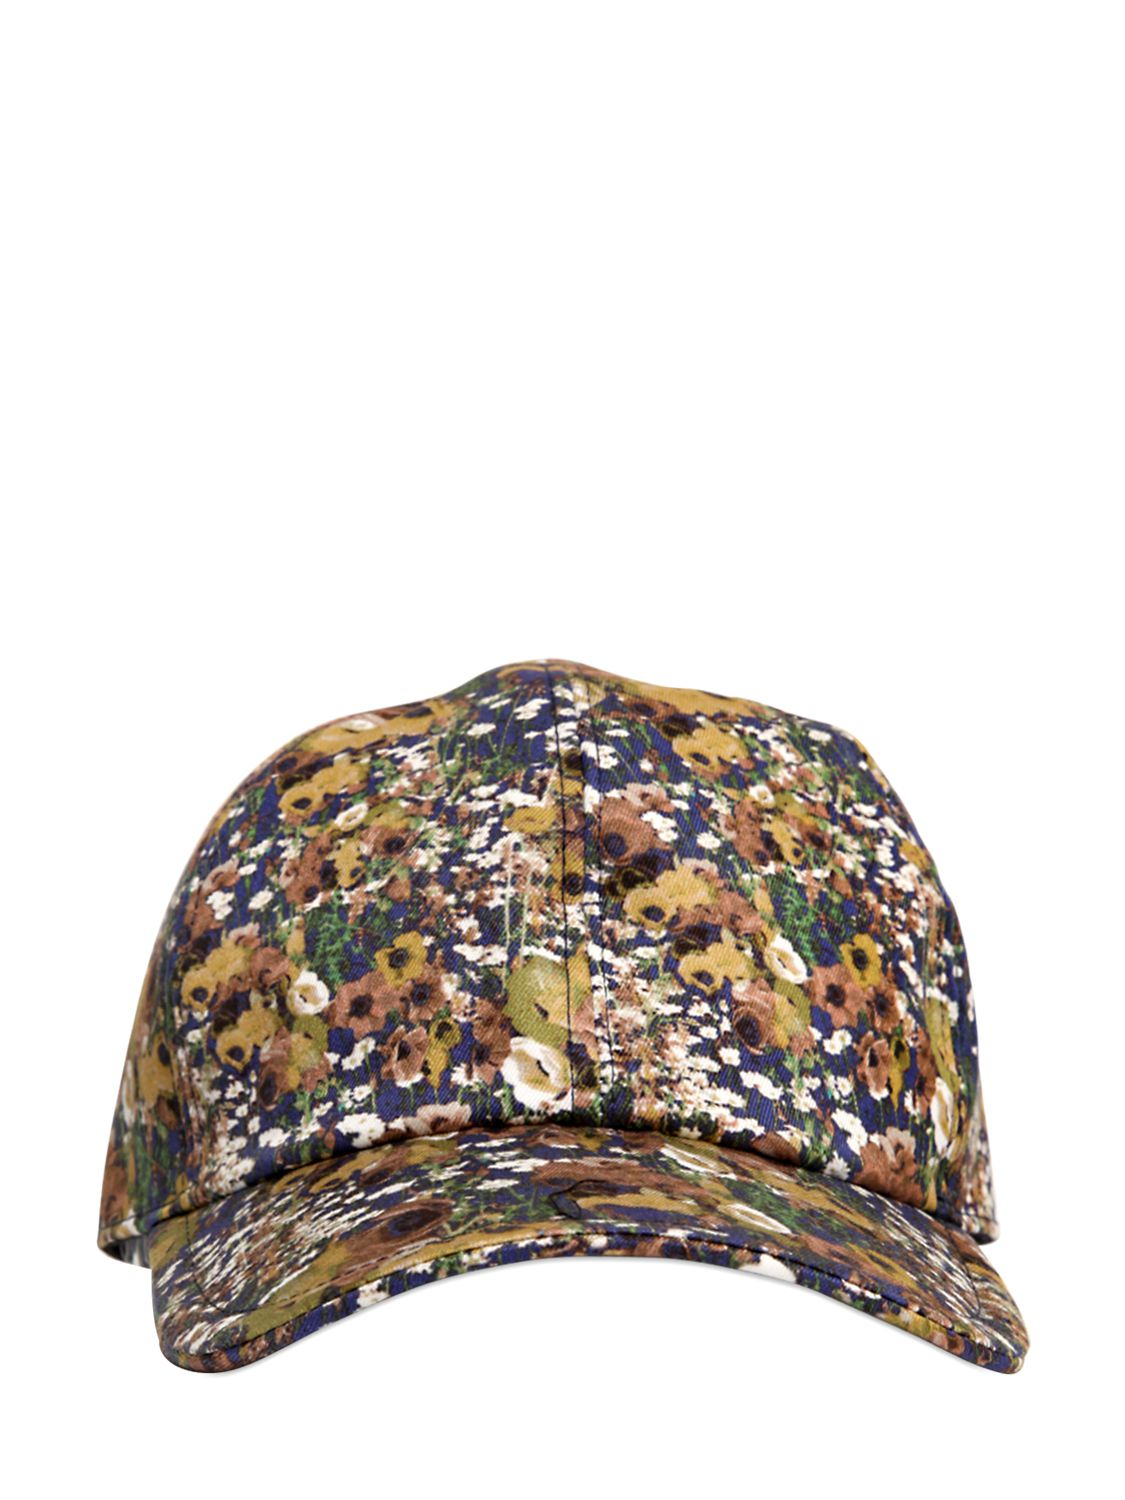 msgm multicolor floral cap hat product 1 16147710 1 964891824 normal